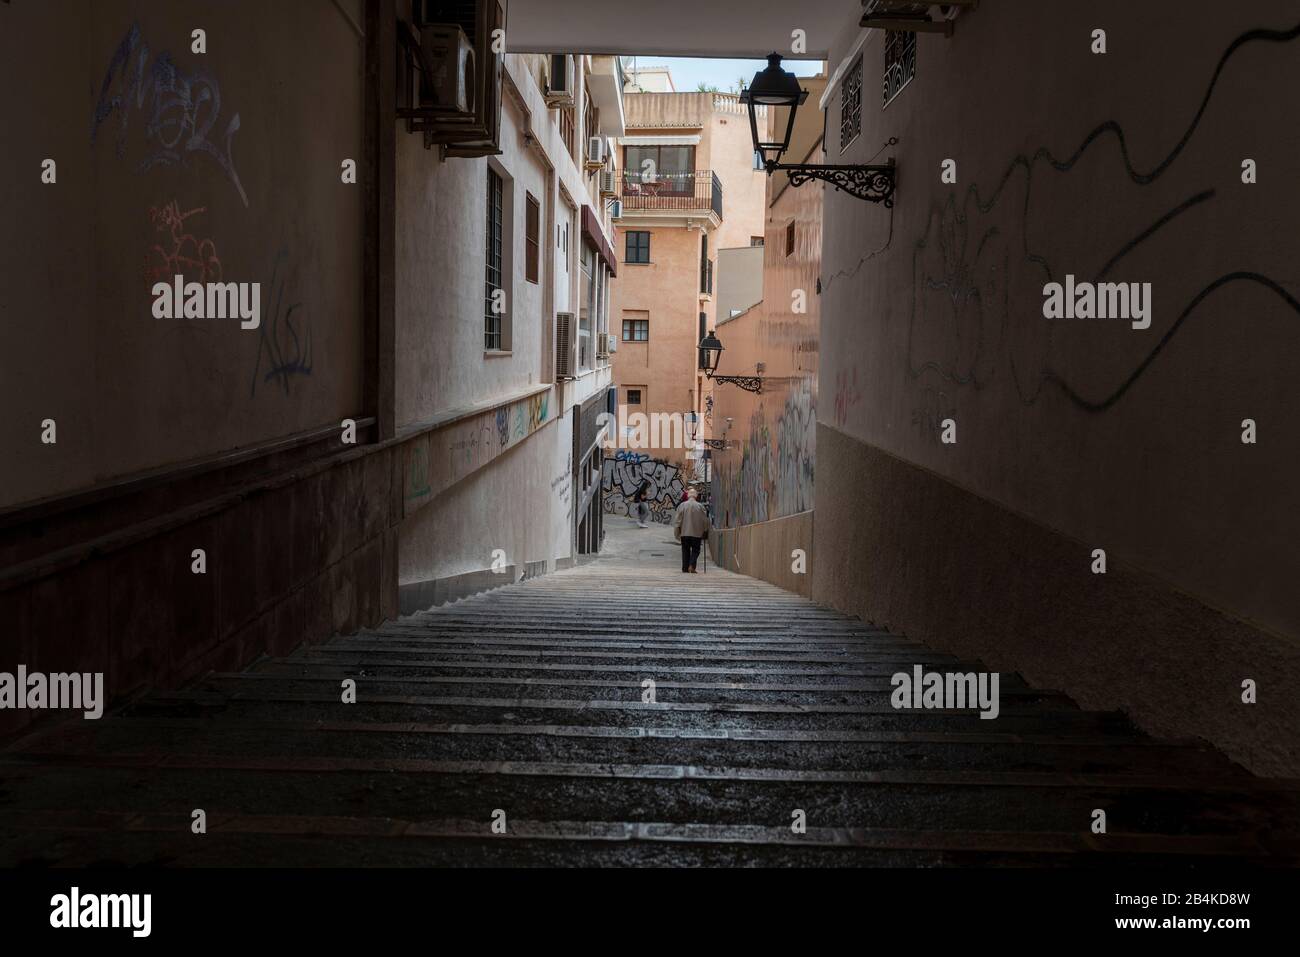 Spanien, Mallorca, Palma, ein Mann mit Rohrstock geht eine Treppe hinunter. Stockfoto